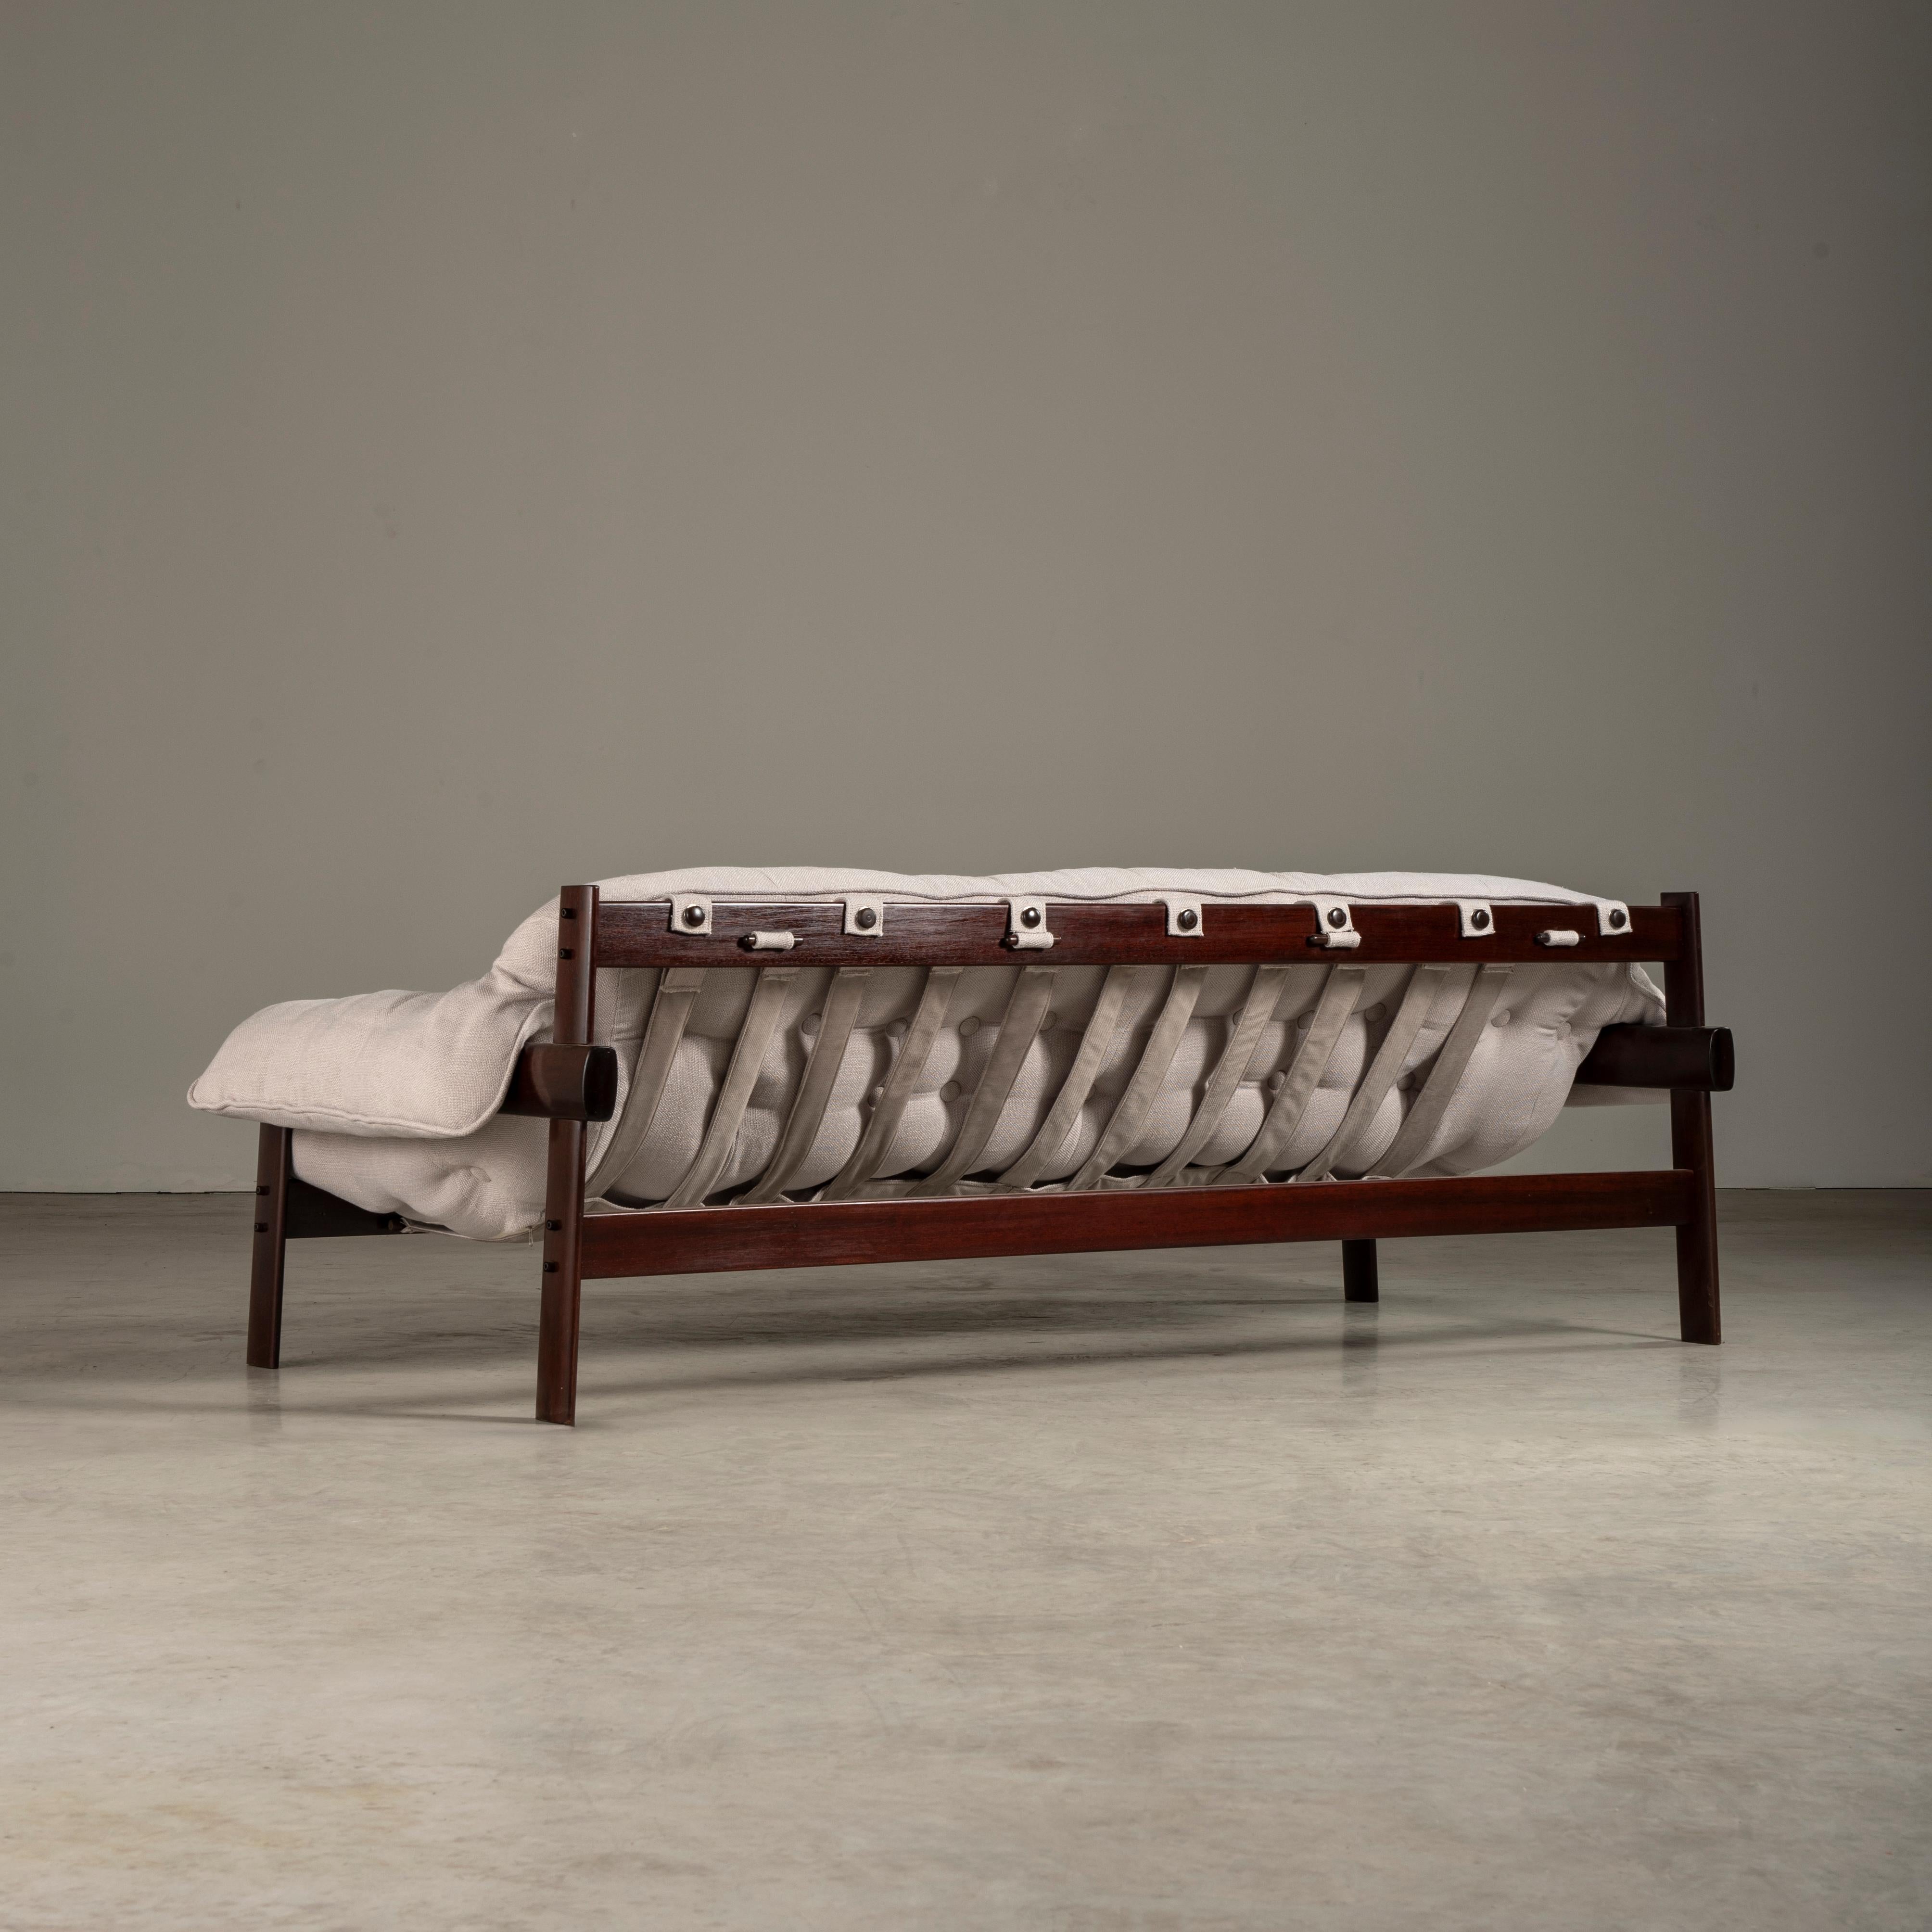 Sofa 'MP-41' in Hardwood, by Percival Lafer, Brazilian Mid-Century Modern Design For Sale 1